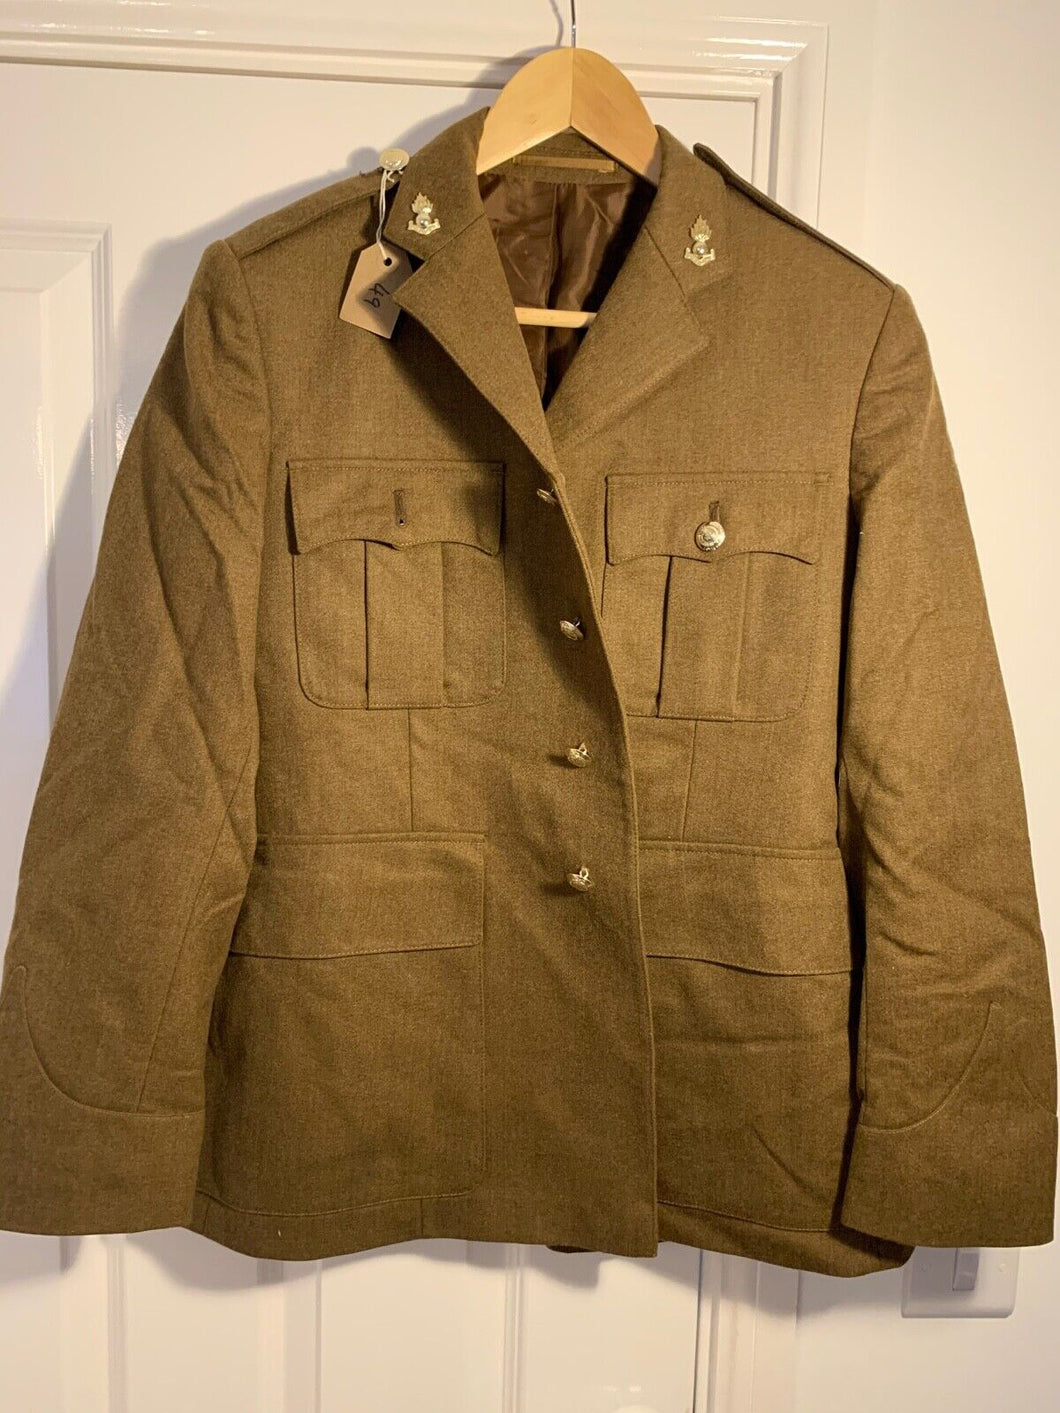 British Army No 2 Dress Uniform Jacket / Tunic Badged - Royal Engineers - #49